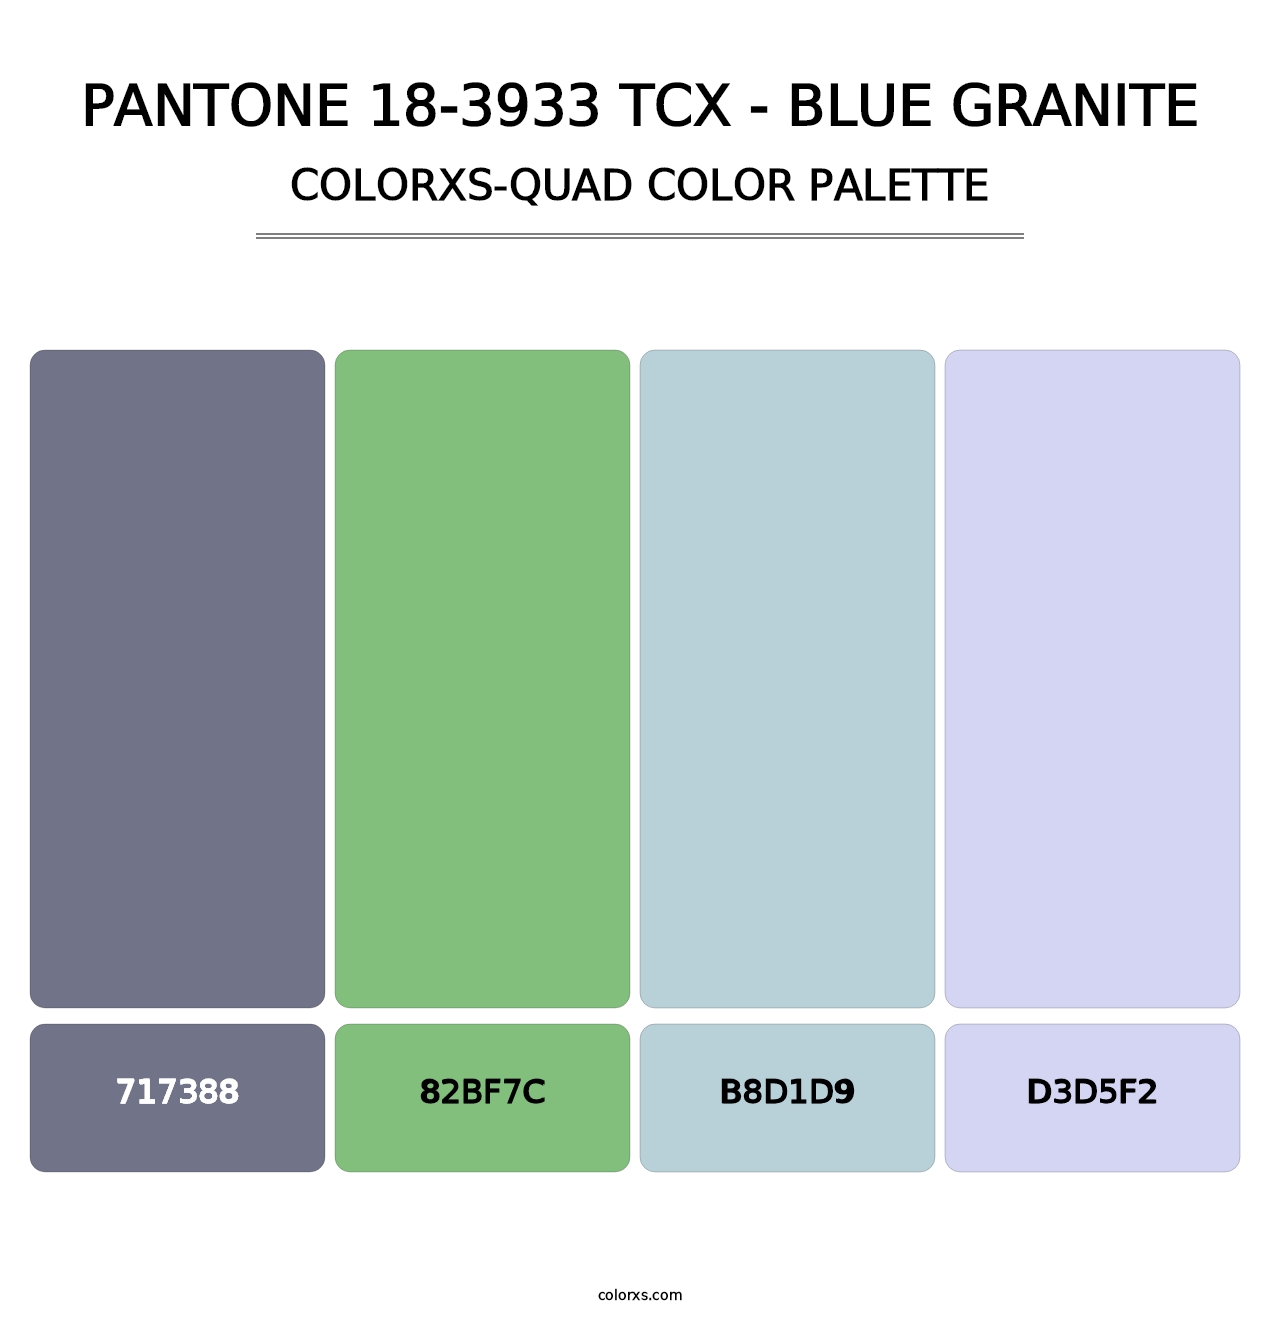 PANTONE 18-3933 TCX - Blue Granite - Colorxs Quad Palette